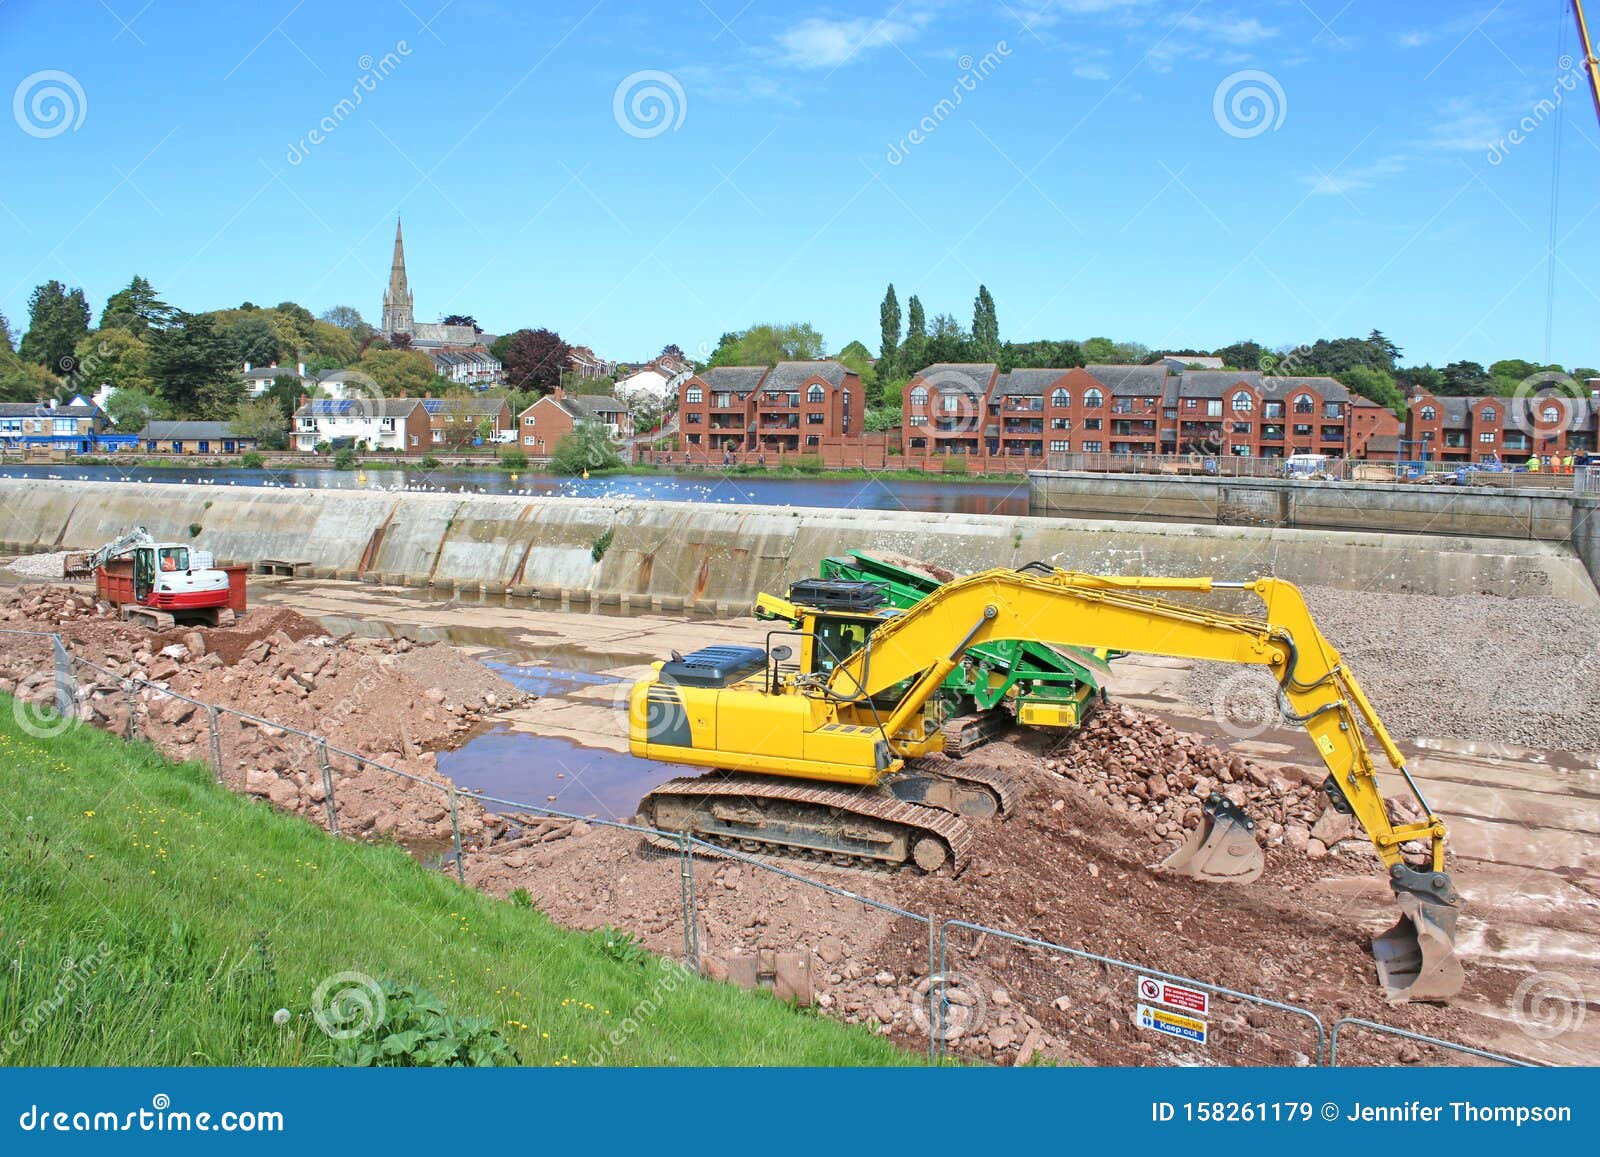 digger working on exeter flood defences